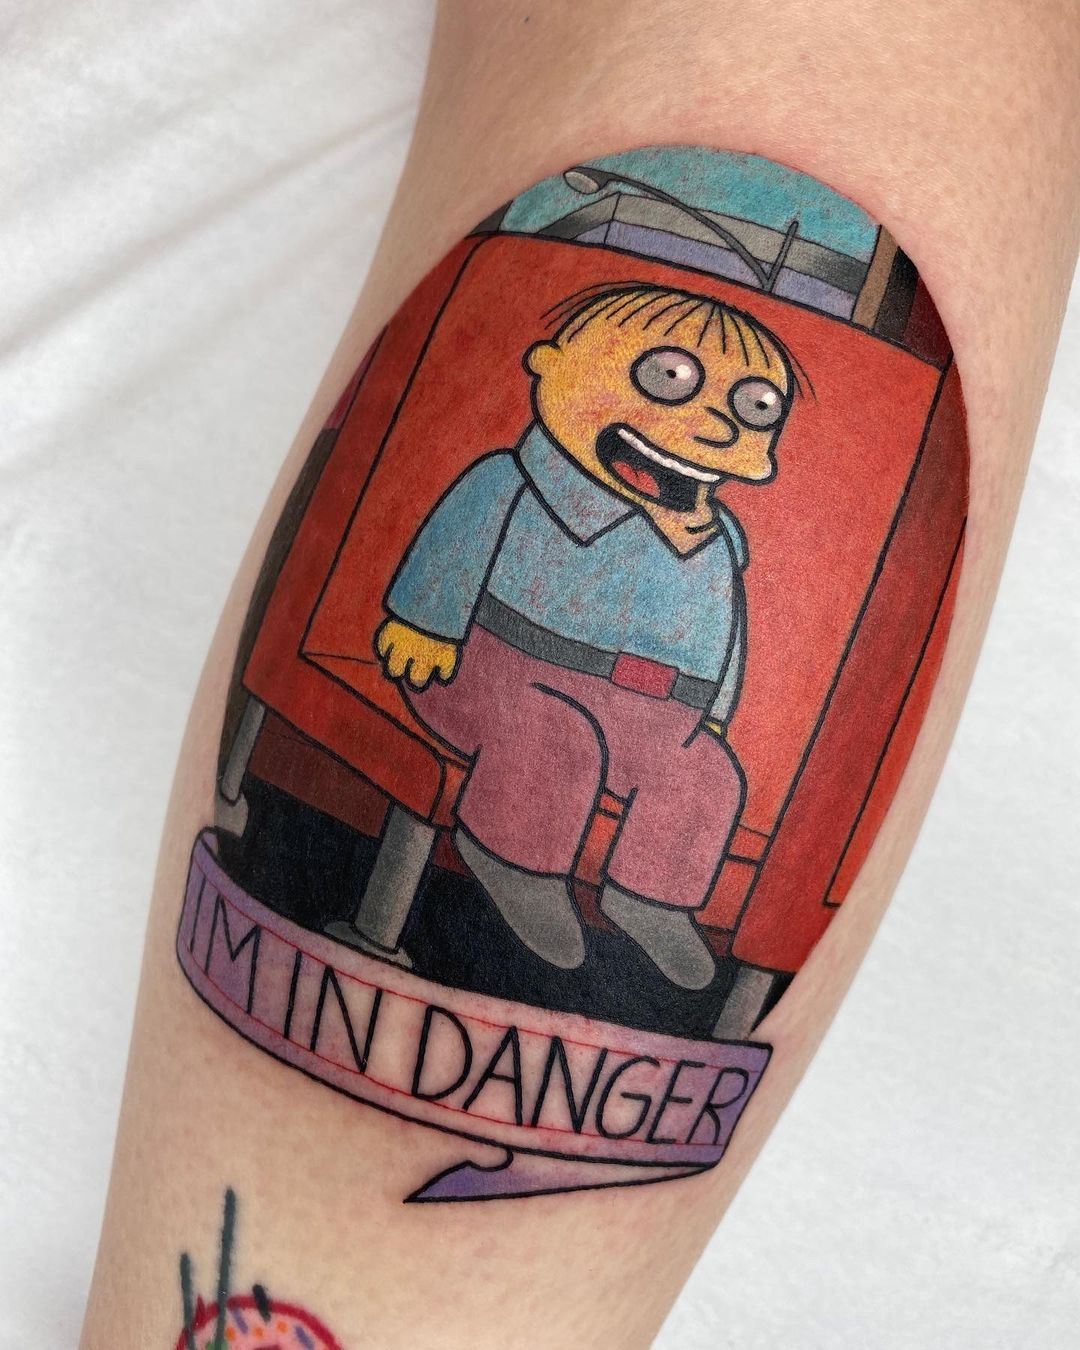 Ralph in bus tattoo